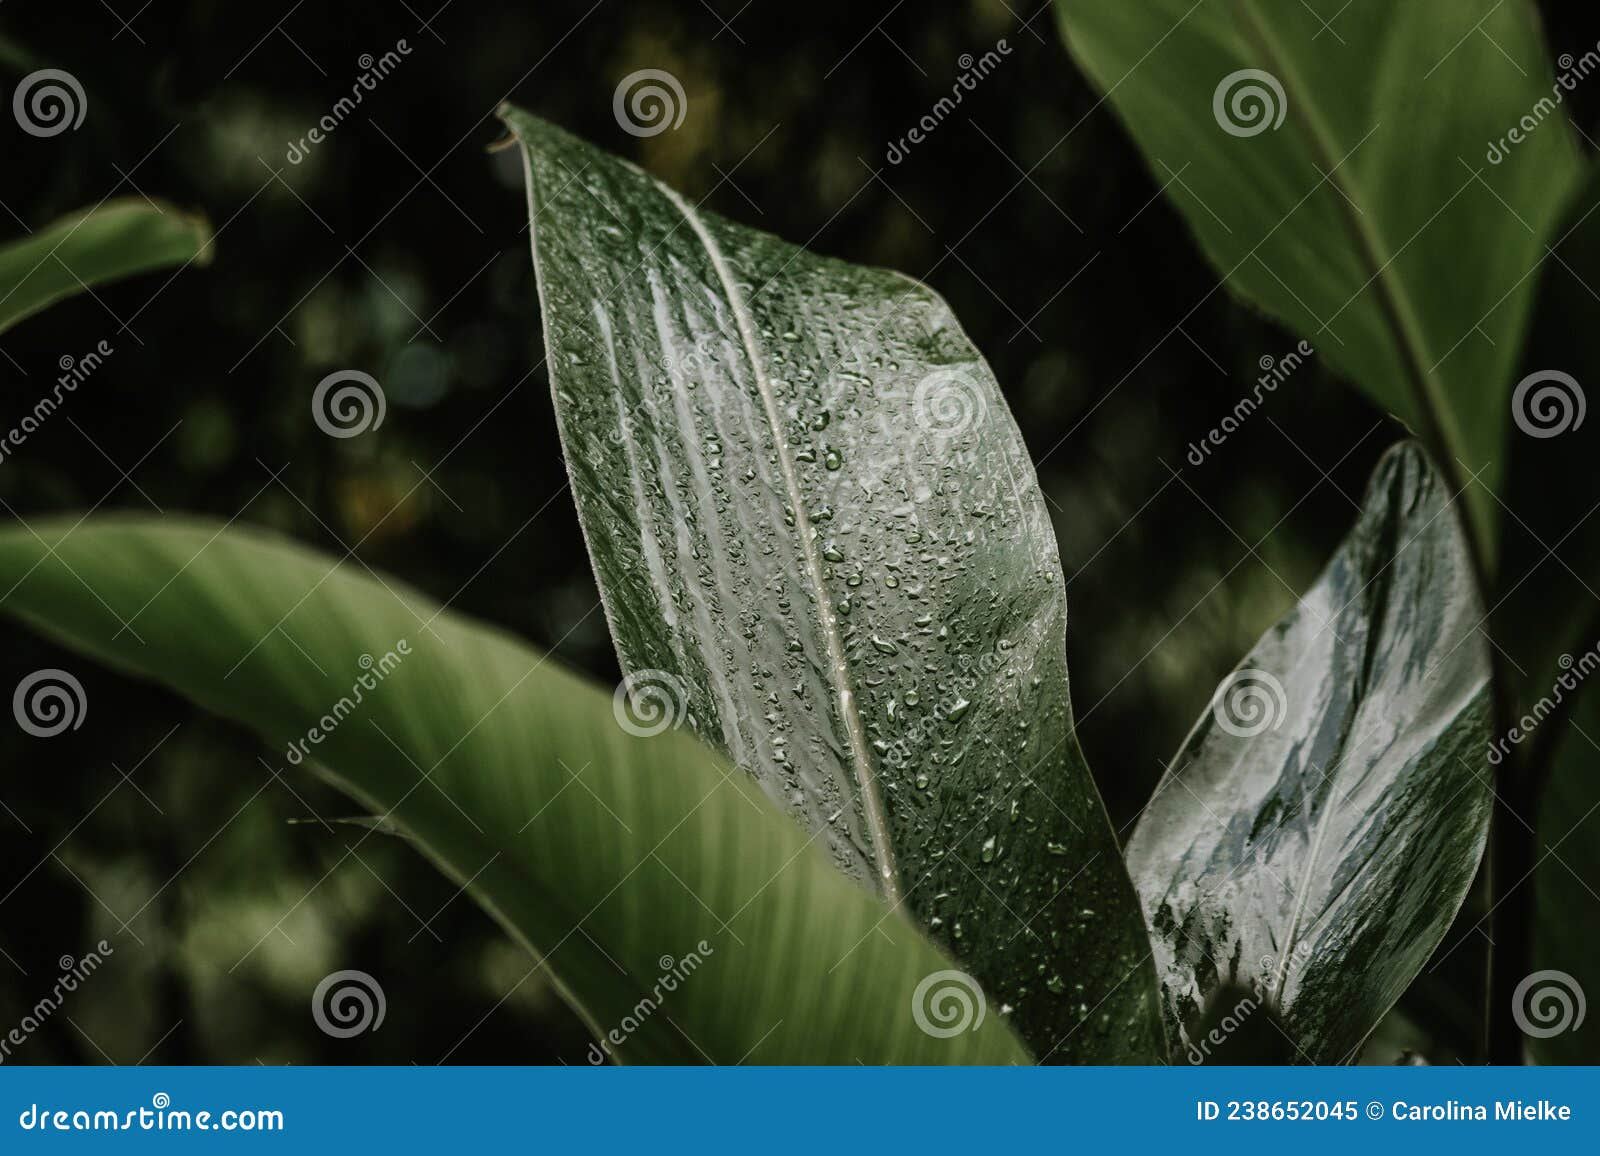 alpinia zerumbet leafs after soft rain